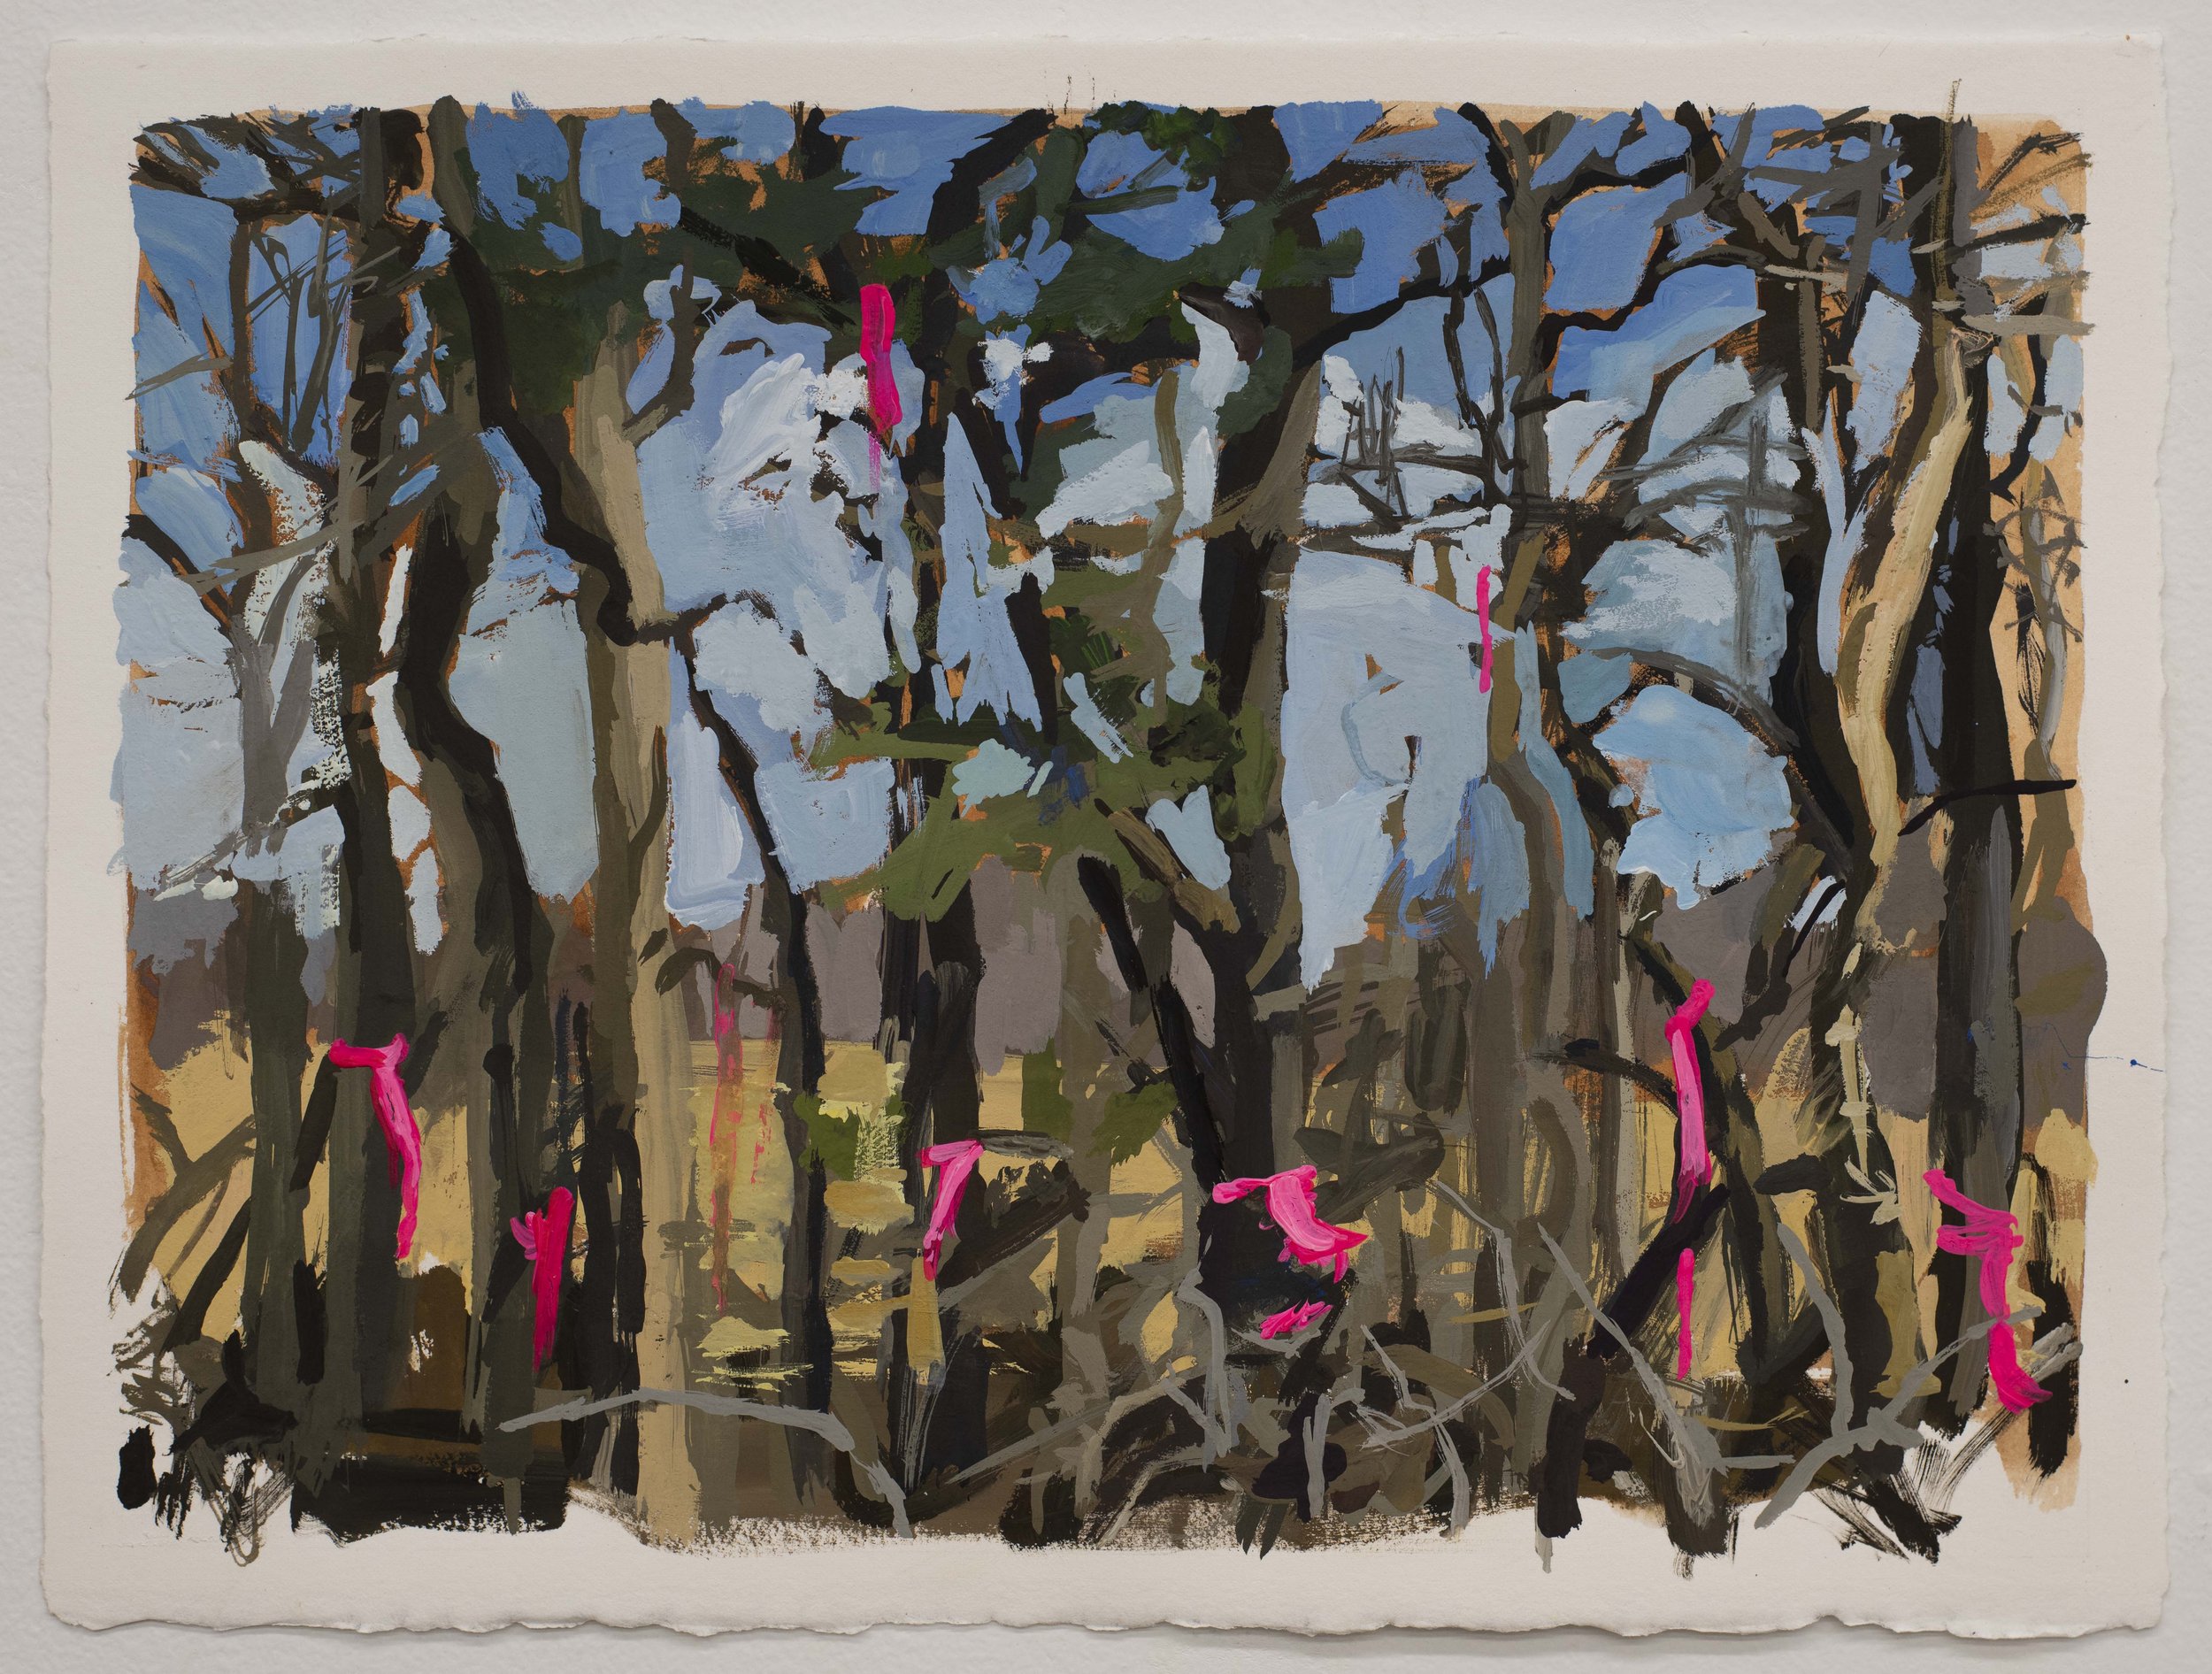  Landscape Study #4, goauche on paper, 11.5 x 15 inches, 2021 